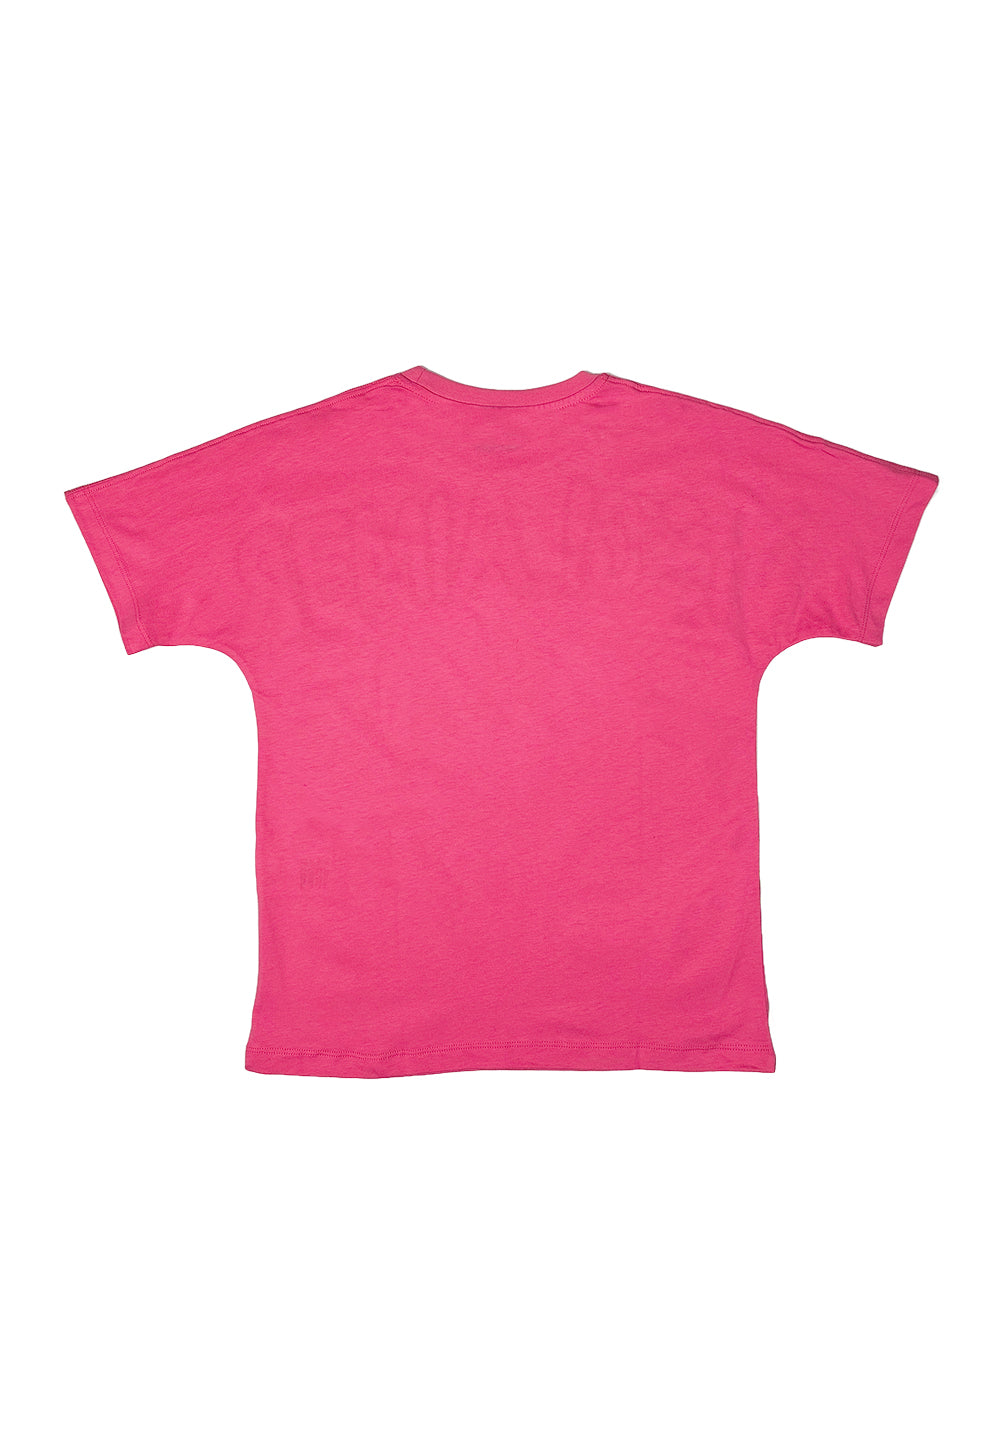 Fuchsia t-shirt for girls